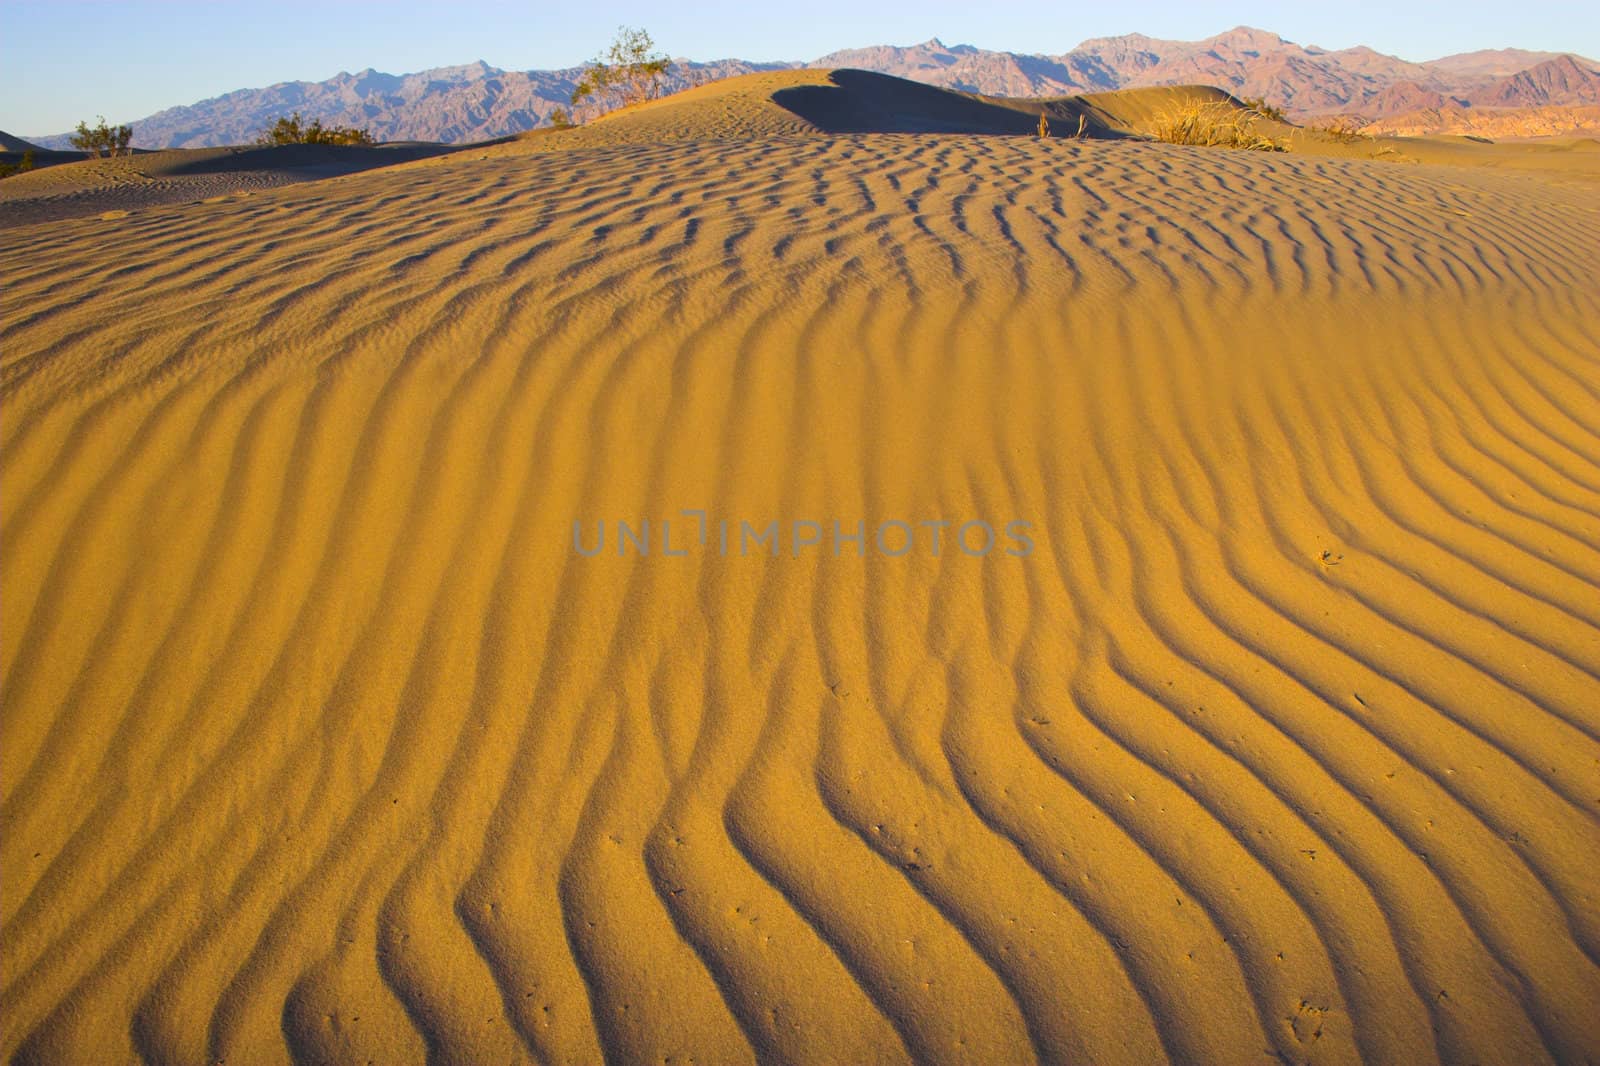 Desert sandscape with dark yellow and orange sand dune deposits